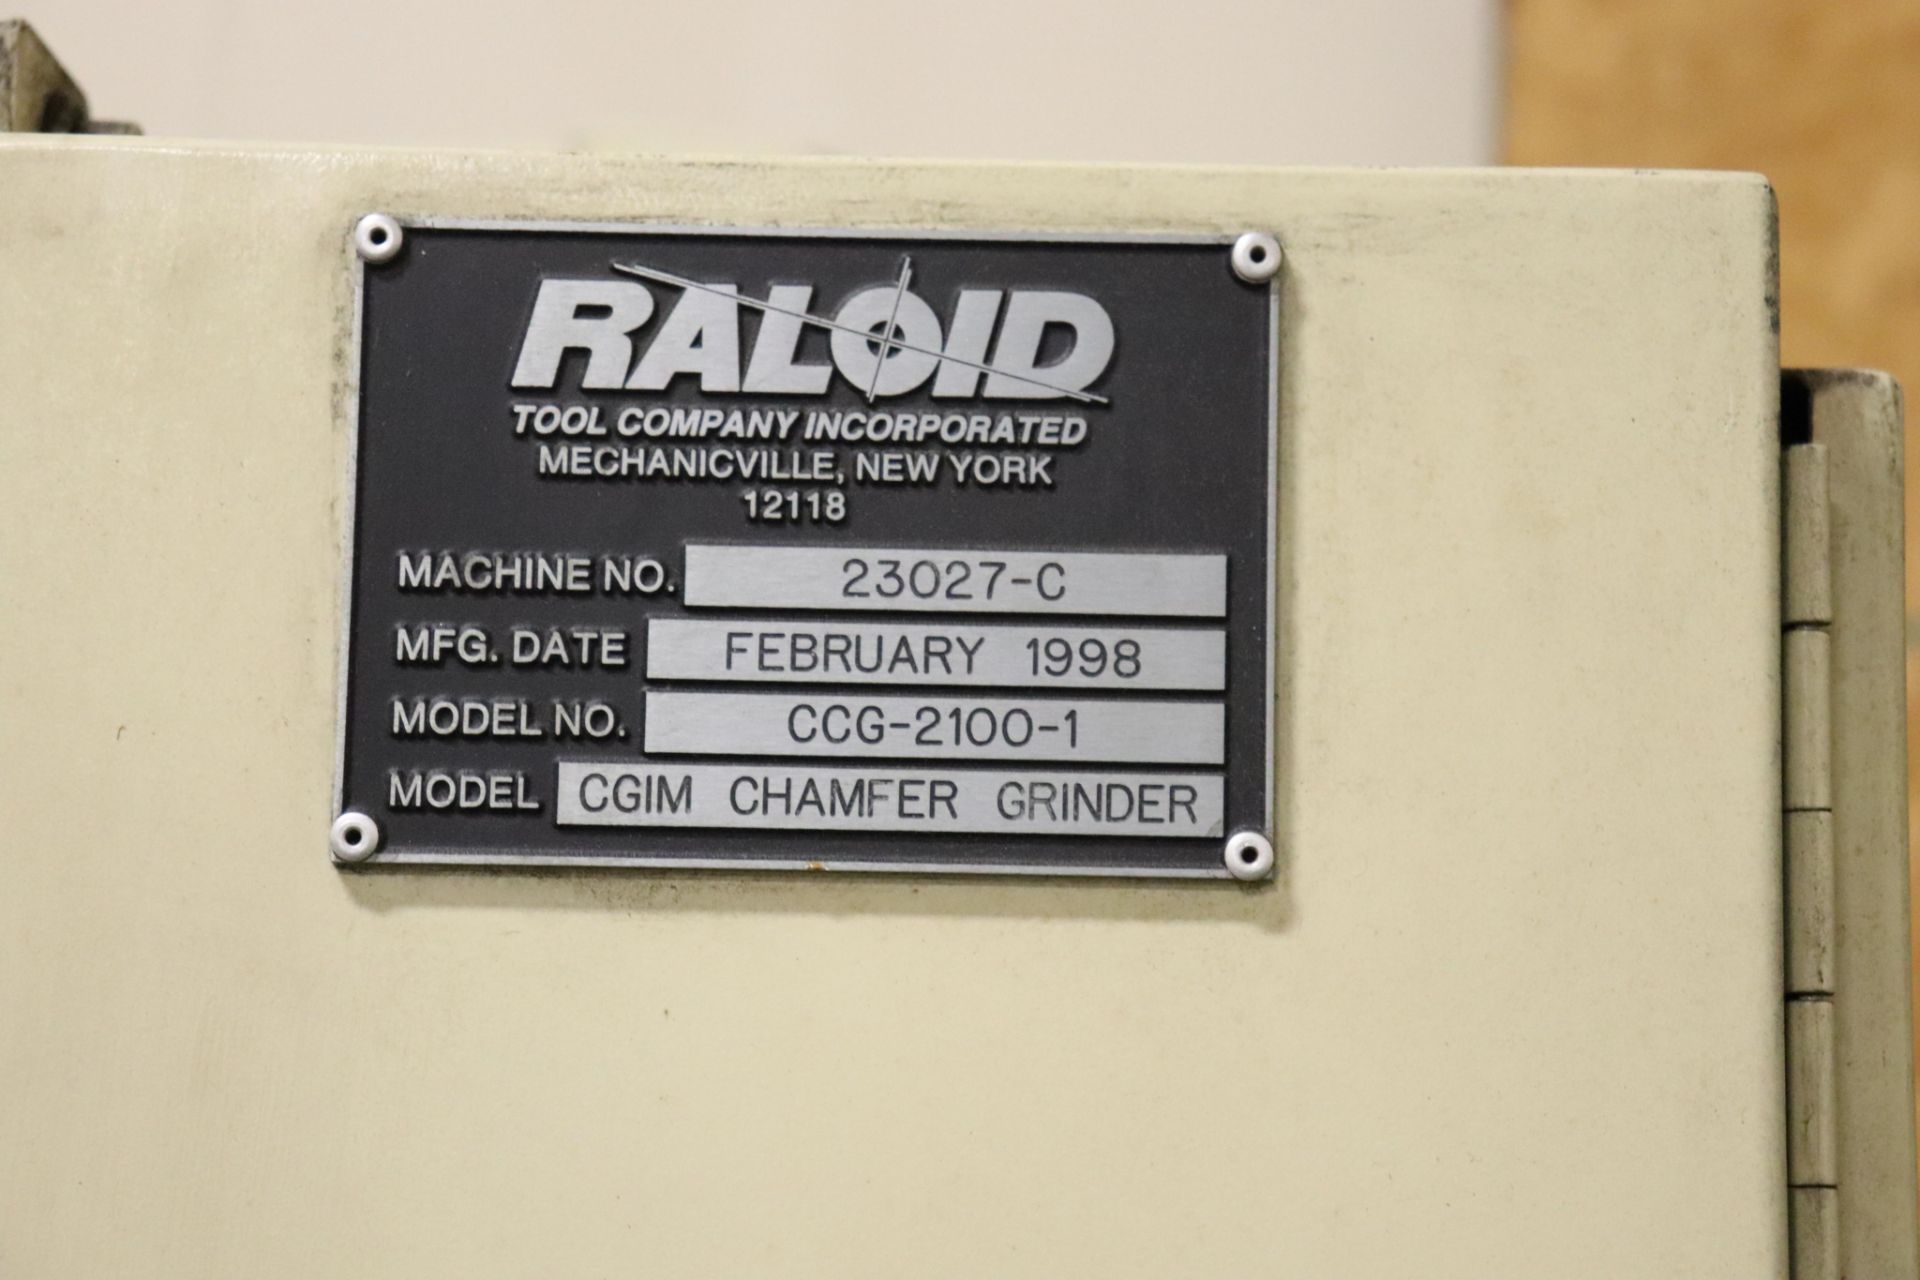 Raloid CCG-2100-1 CGIM chamfer grinder - Image 7 of 8